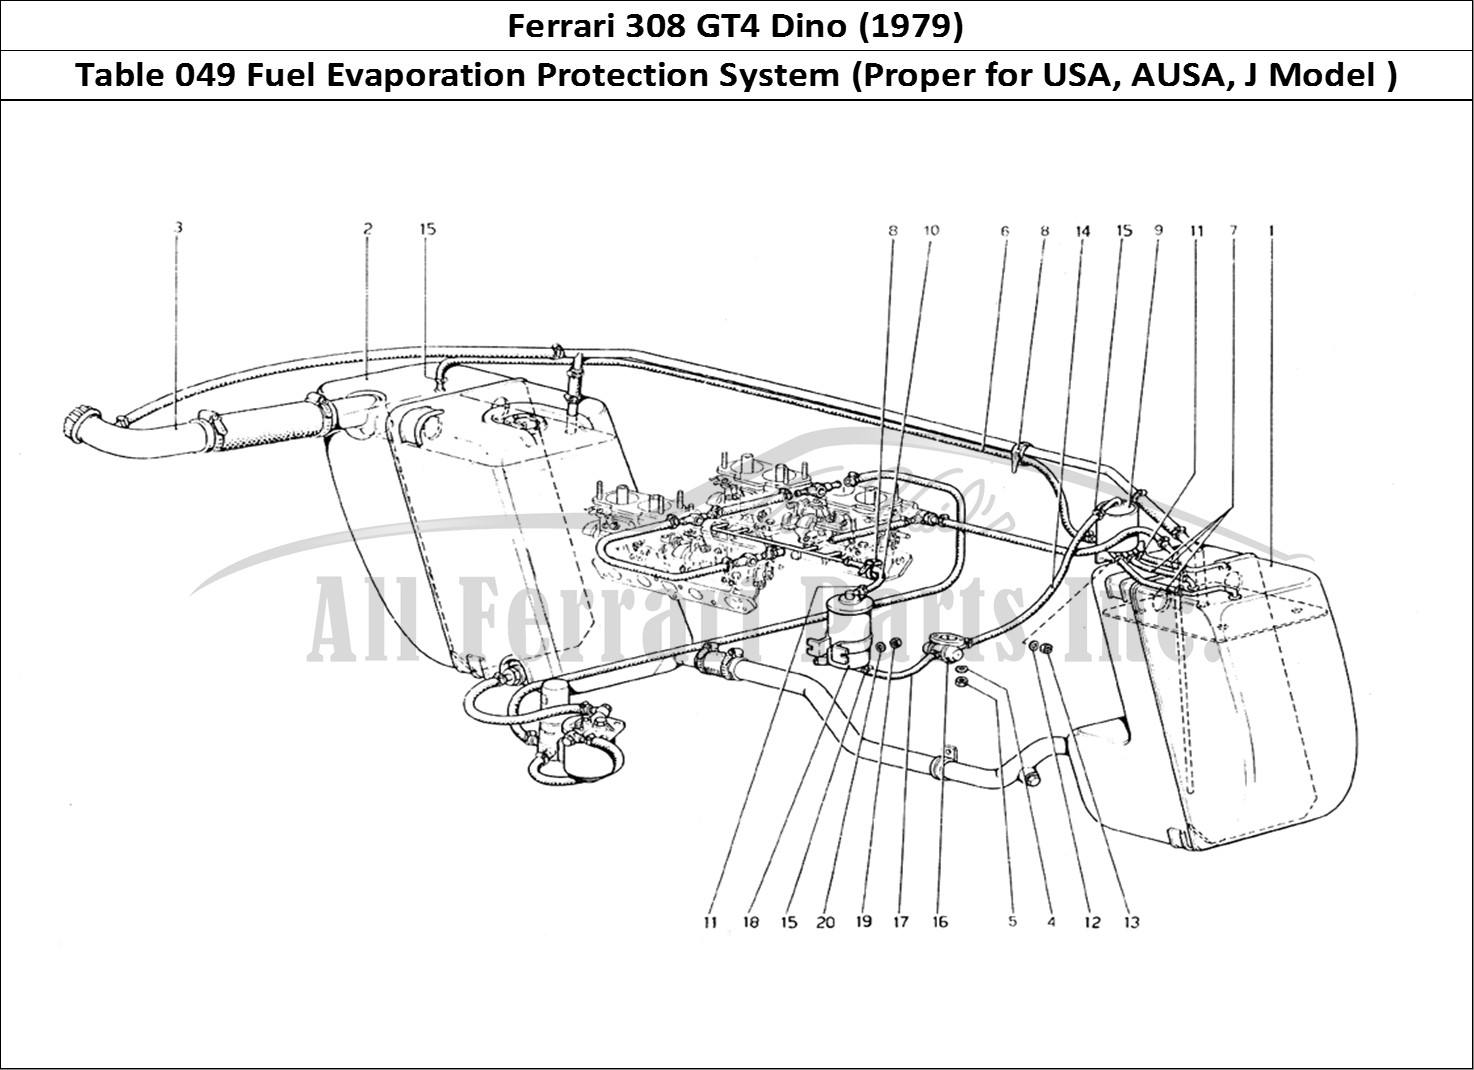 Ferrari Parts Ferrari 308 GT4 Dino (1979) Page 049 Antievaporative Emission